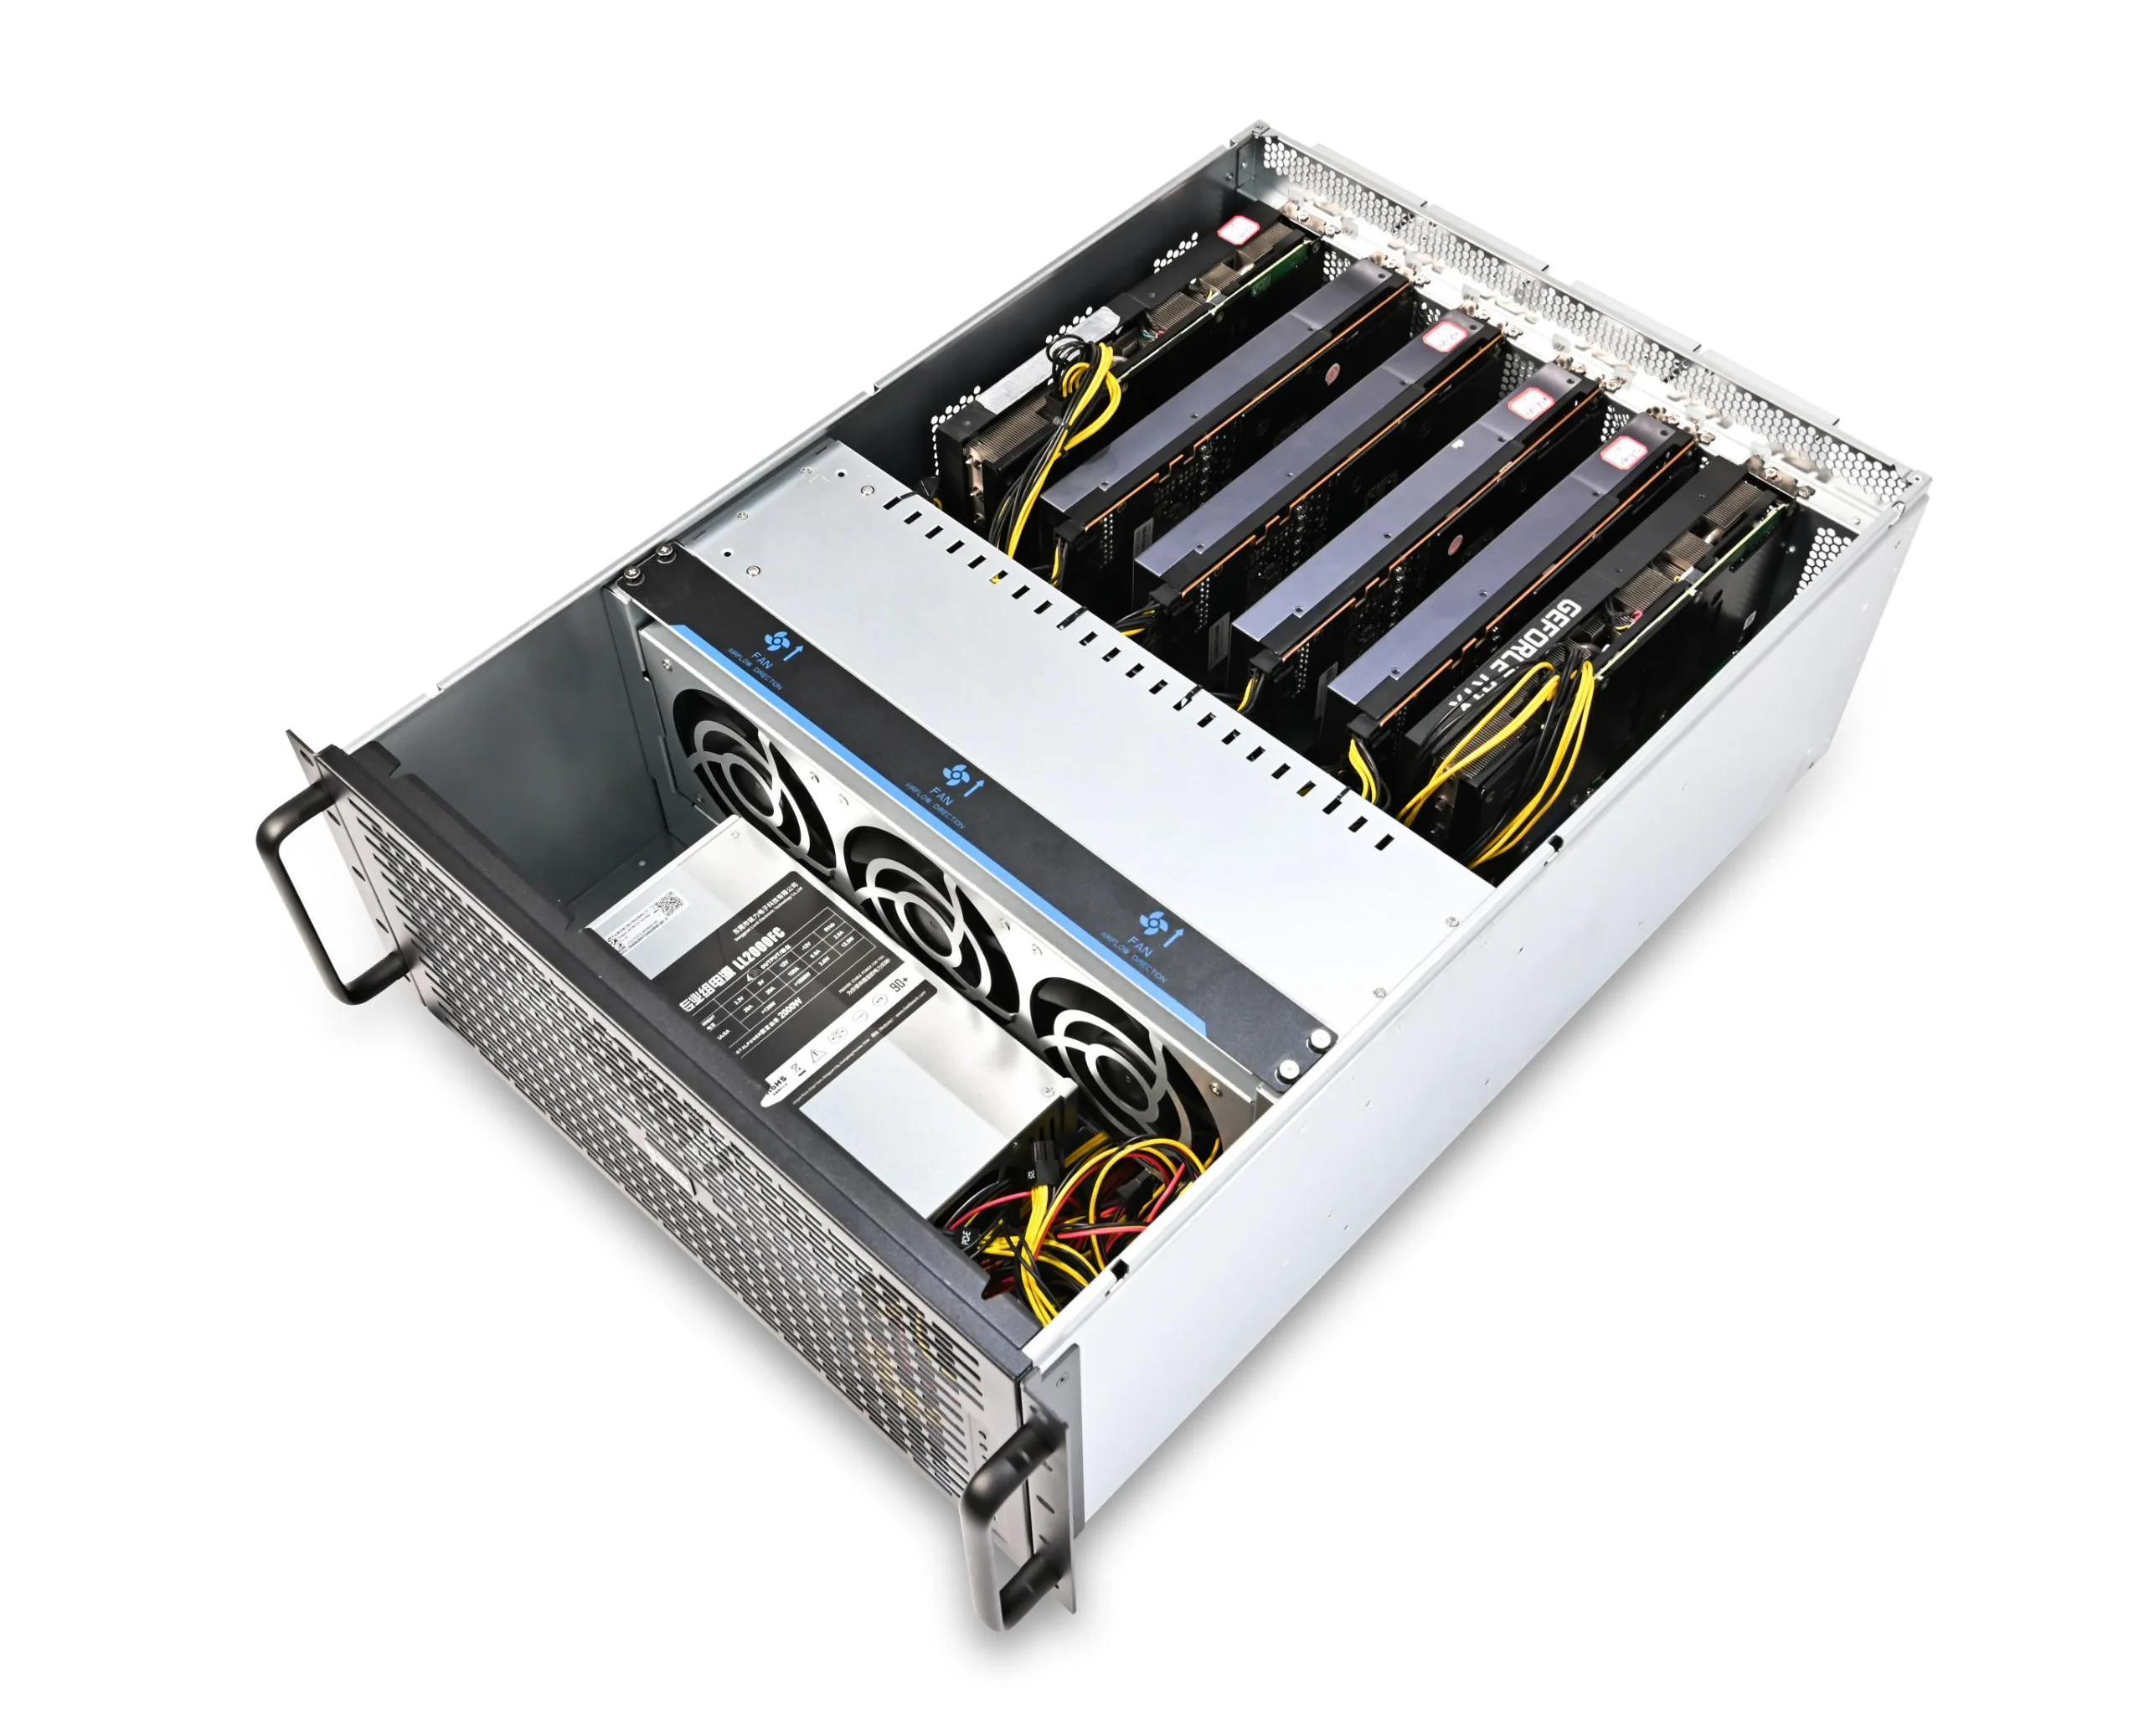 High Performance computer case 4u IDC 64G platform Rack GPU server ALEO